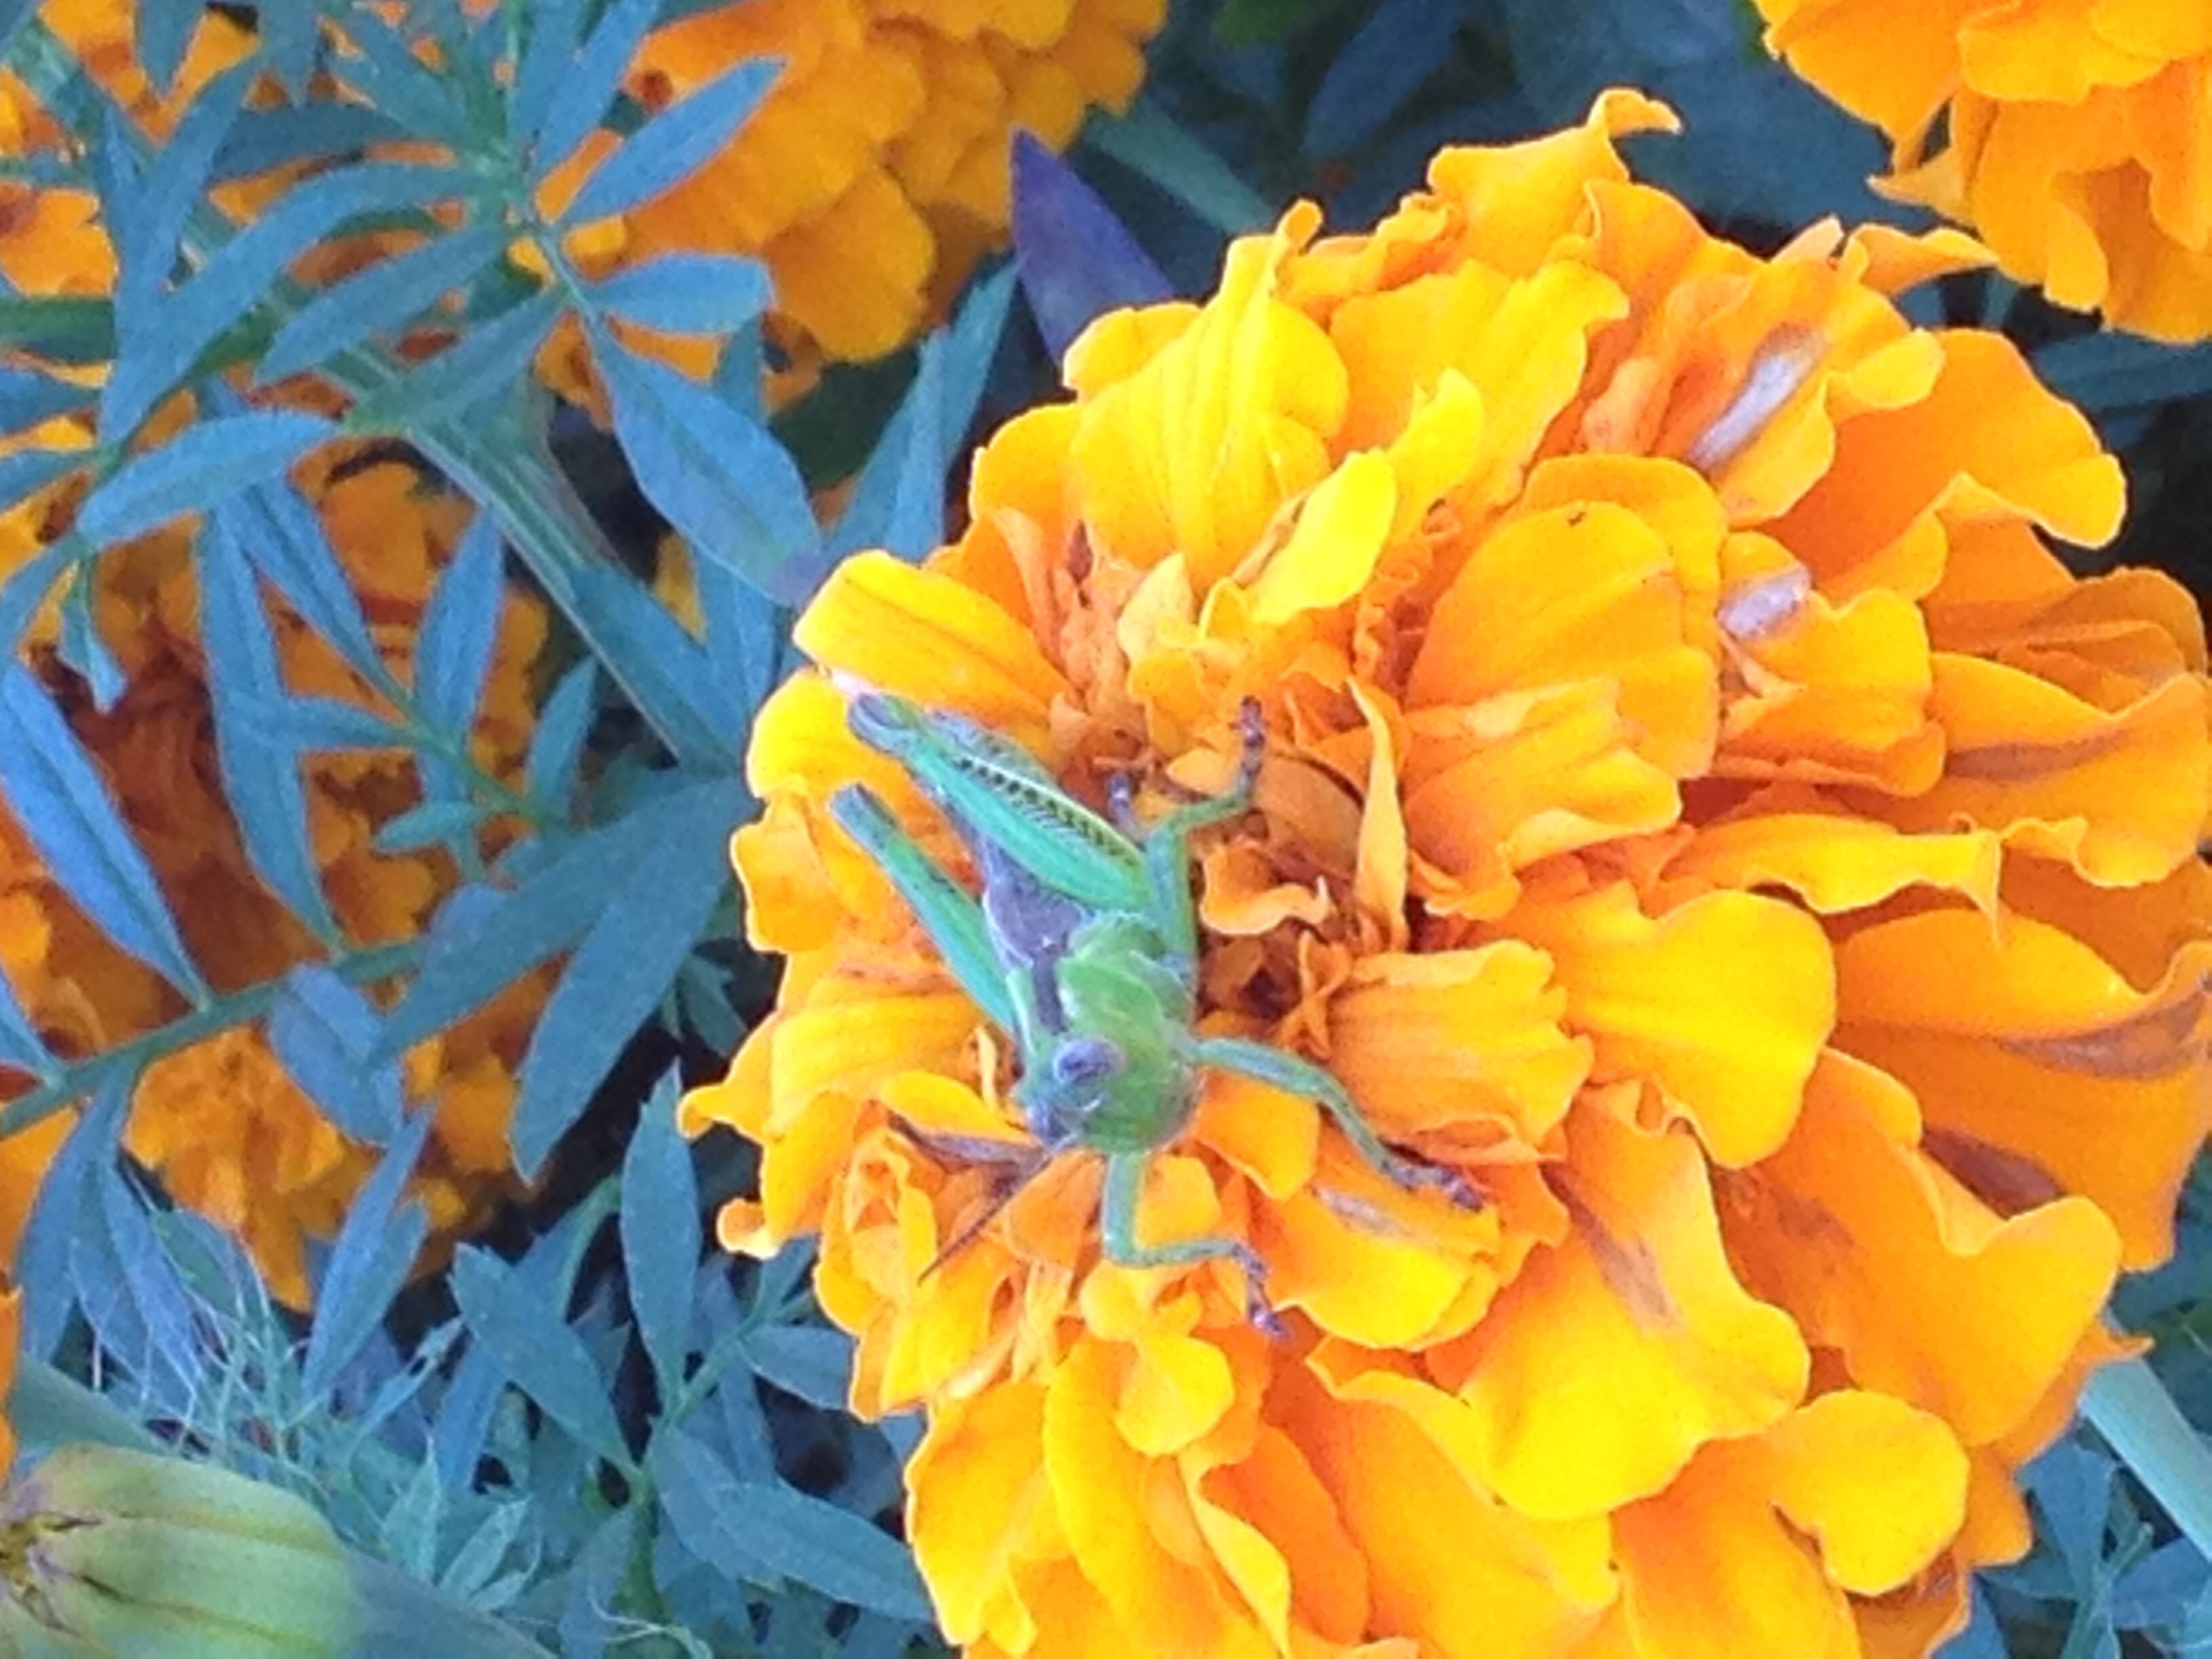 Grasshopper on marigolds in garden